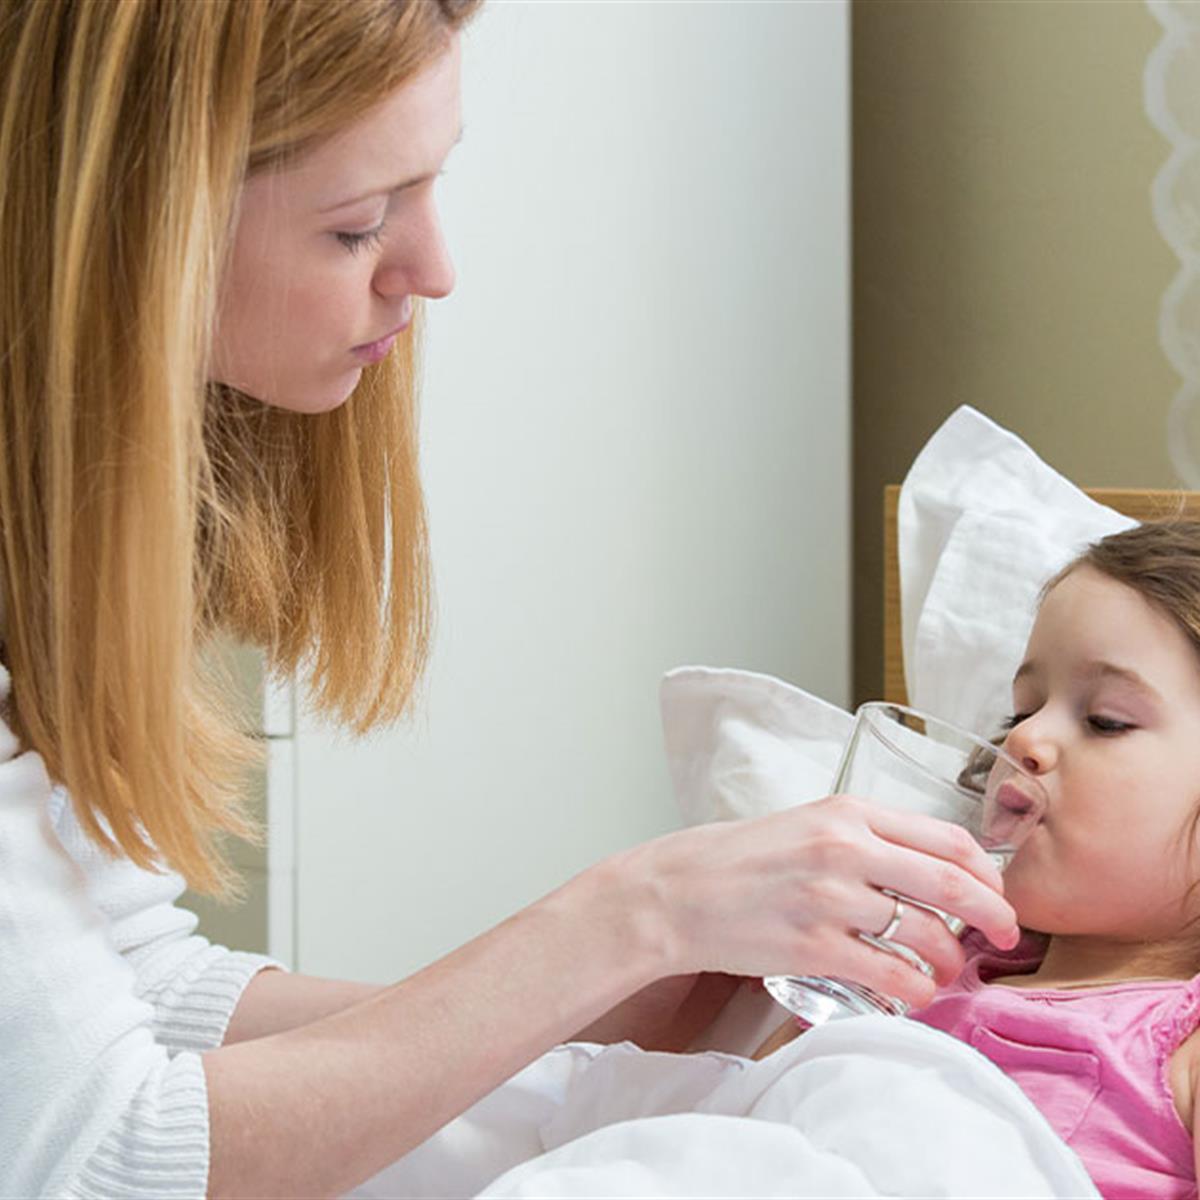 Drinks Prevent Dehydration Your Child is Vomiting - HealthyChildren.org